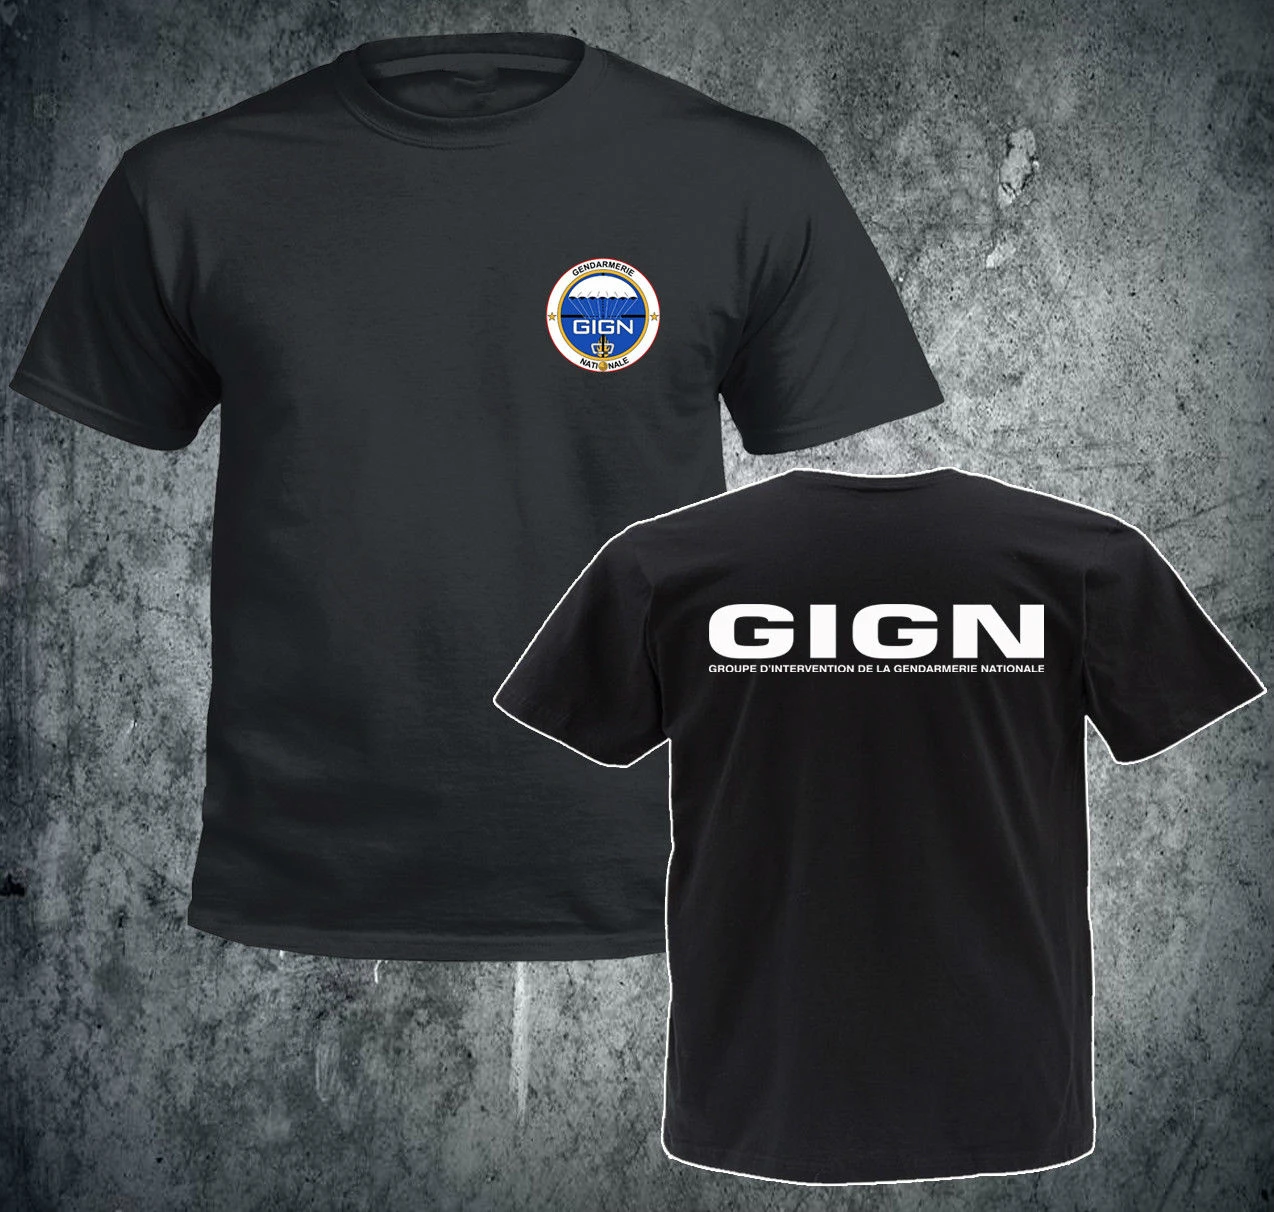 

2019 Hot sale Fashion Inspired Gign Gendarmerie Nationale Men's Design T Shirt Tee shirt